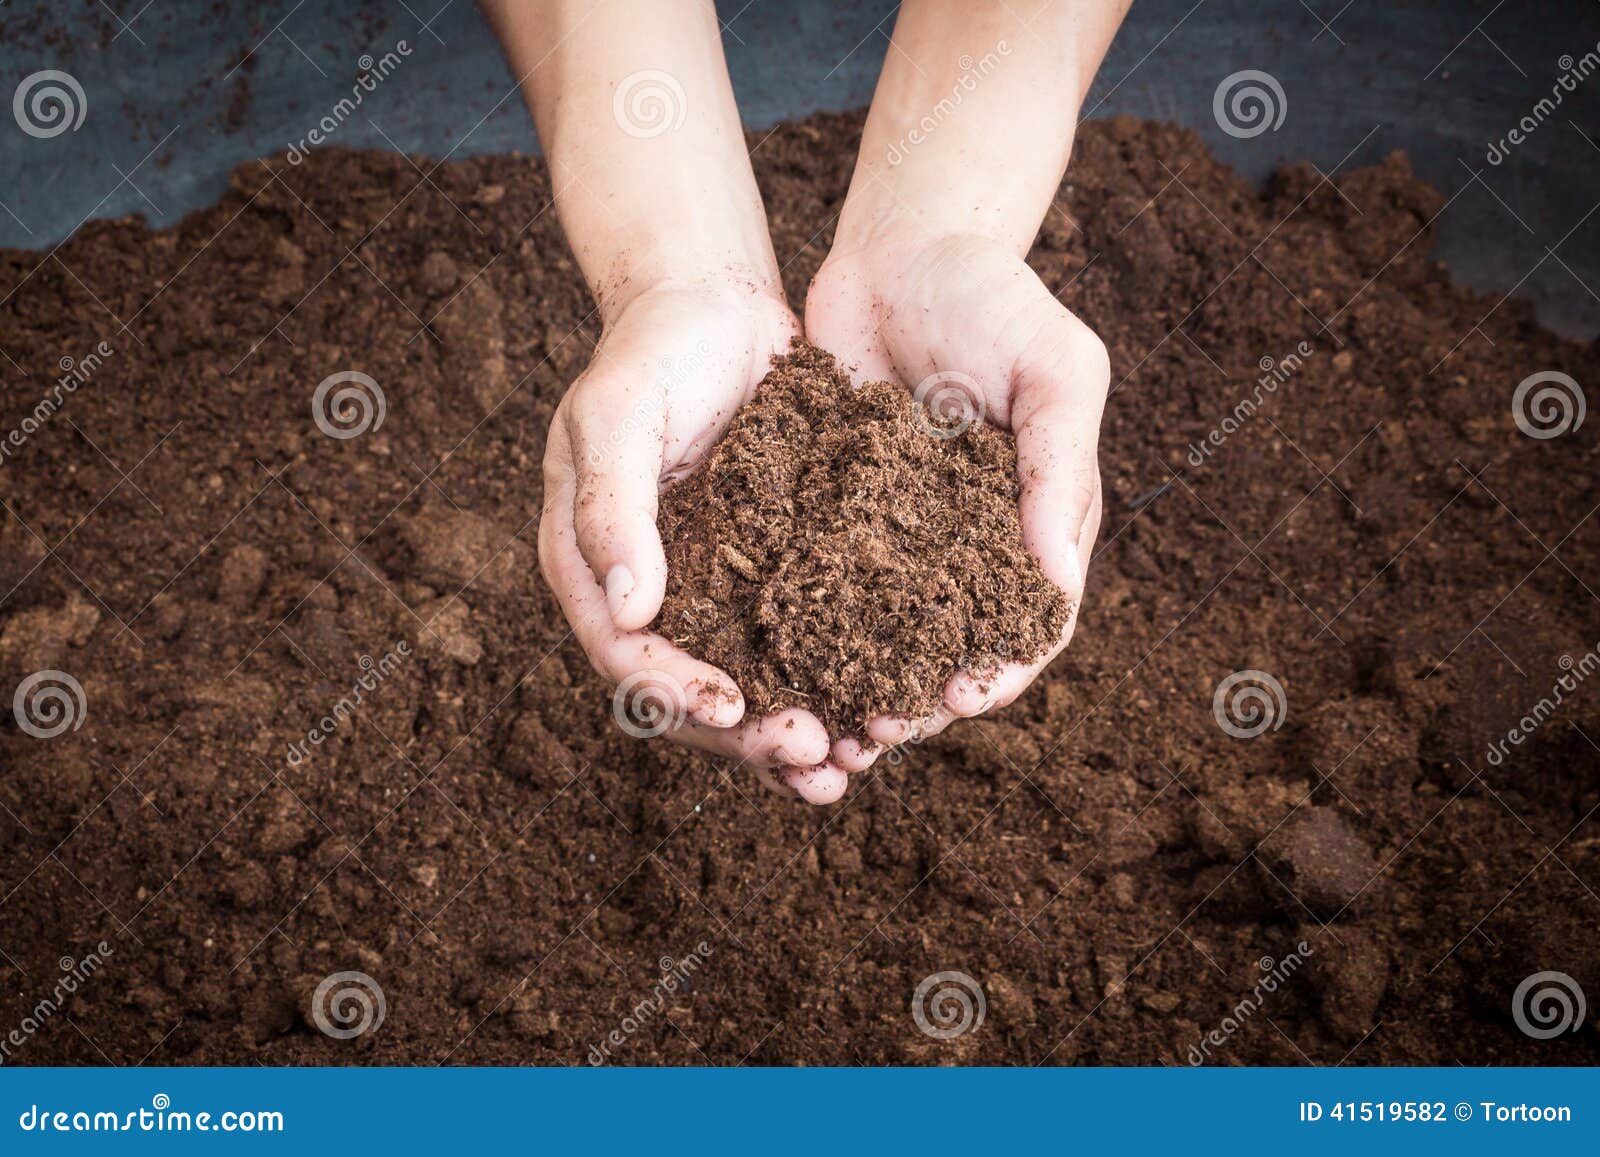 peat moss soil on hand woman